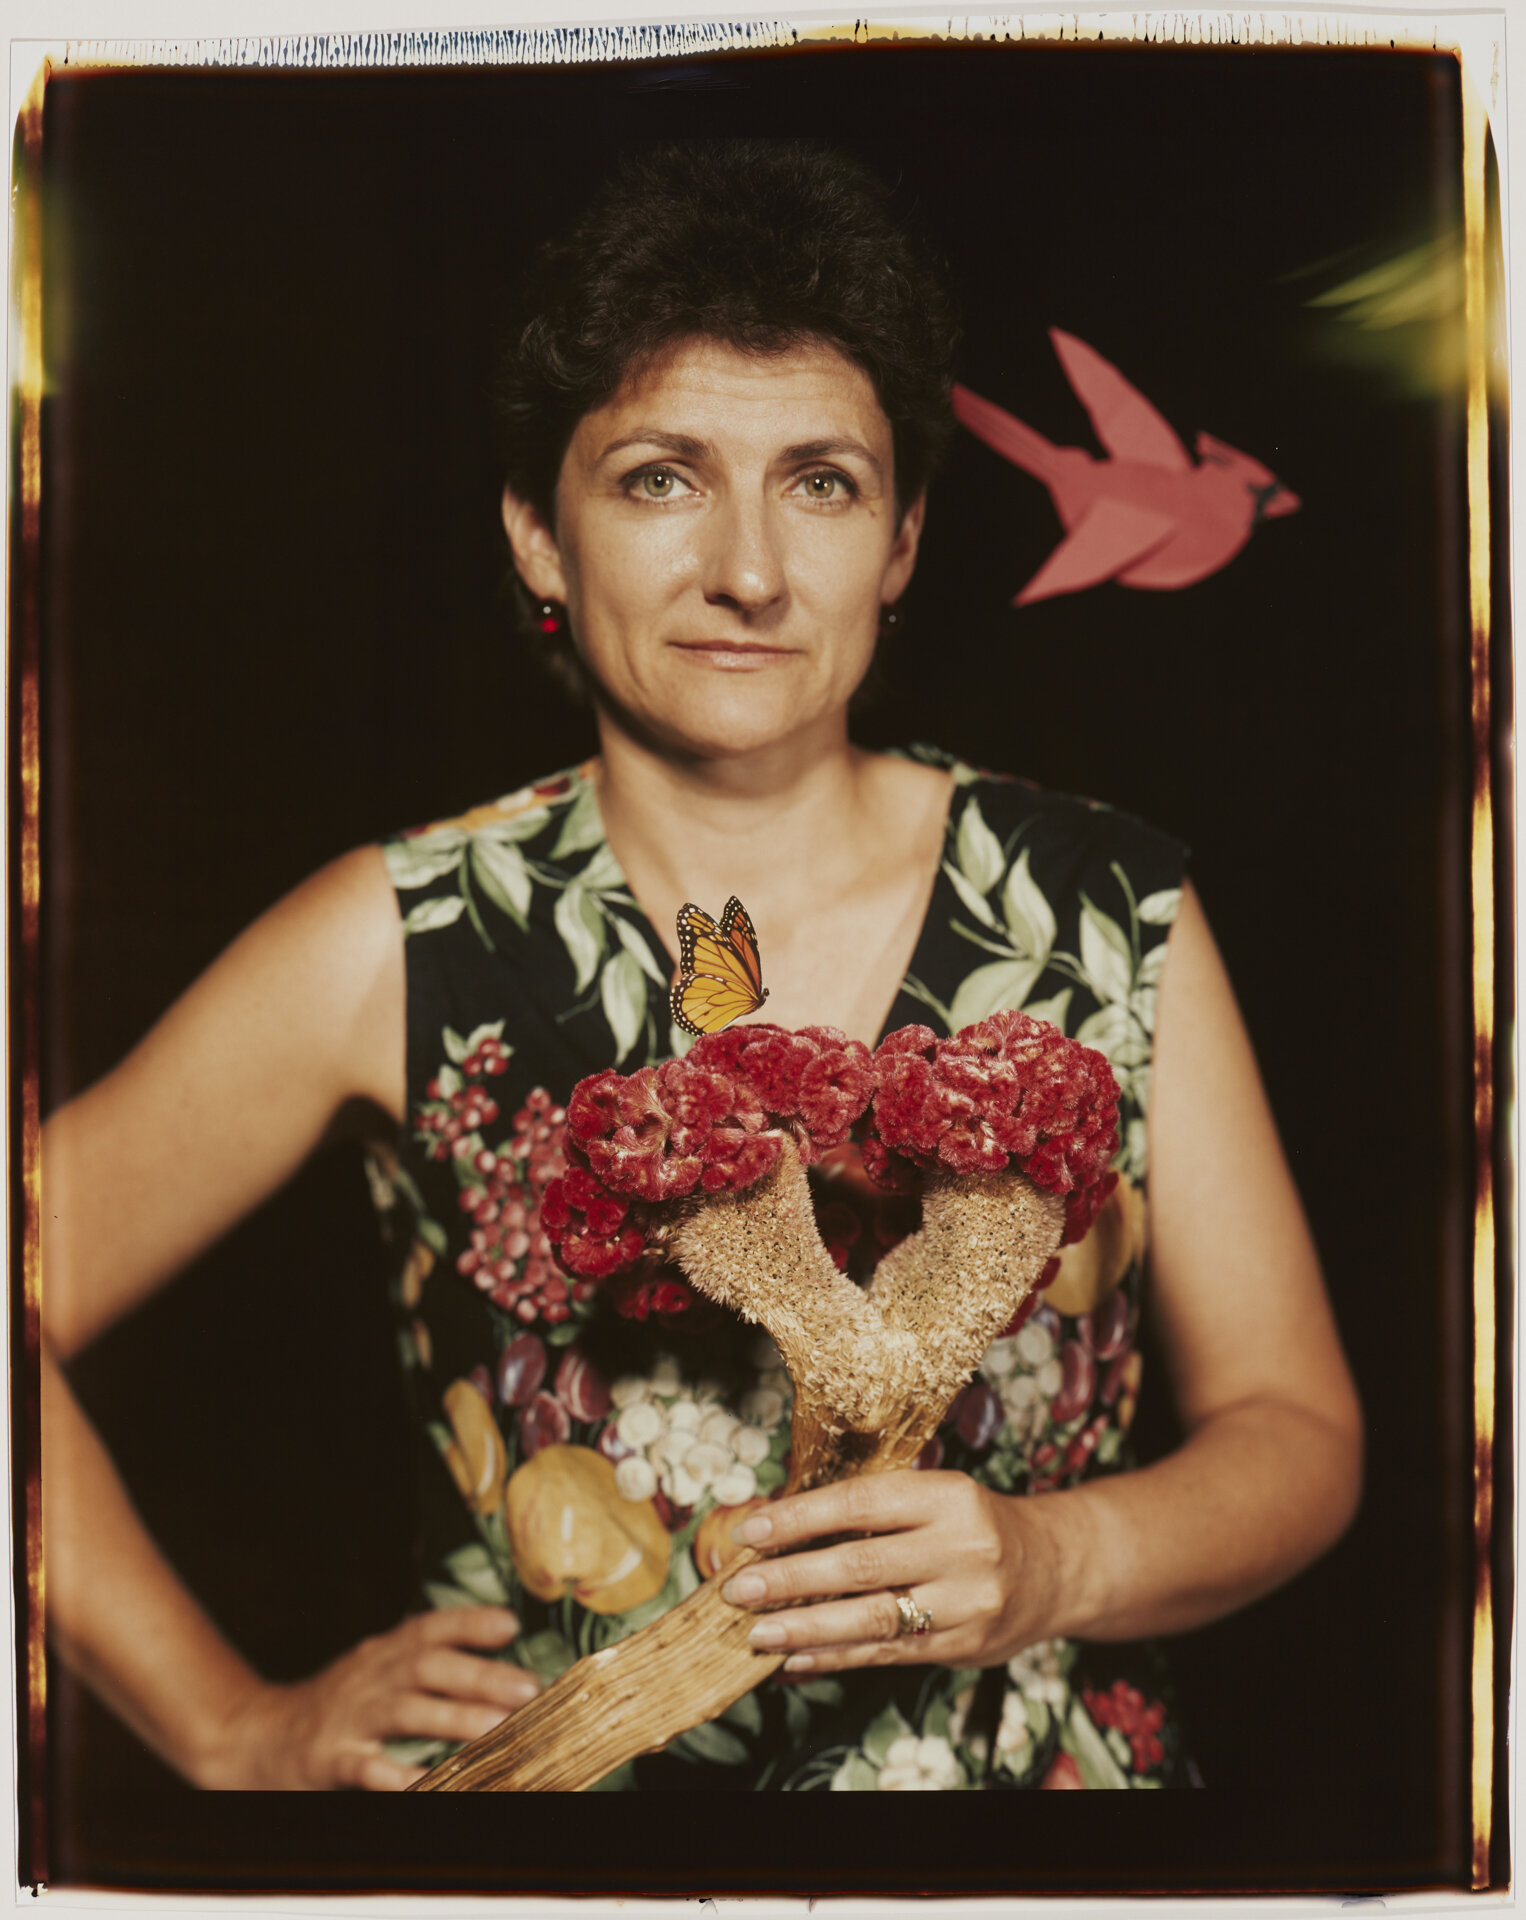   Bea Nettles  (American, b. 1946).  Flower Dress , 1987. Dye diffusion transfer print. George Eastman Museum, gift of the artist. © Bea Nettles 